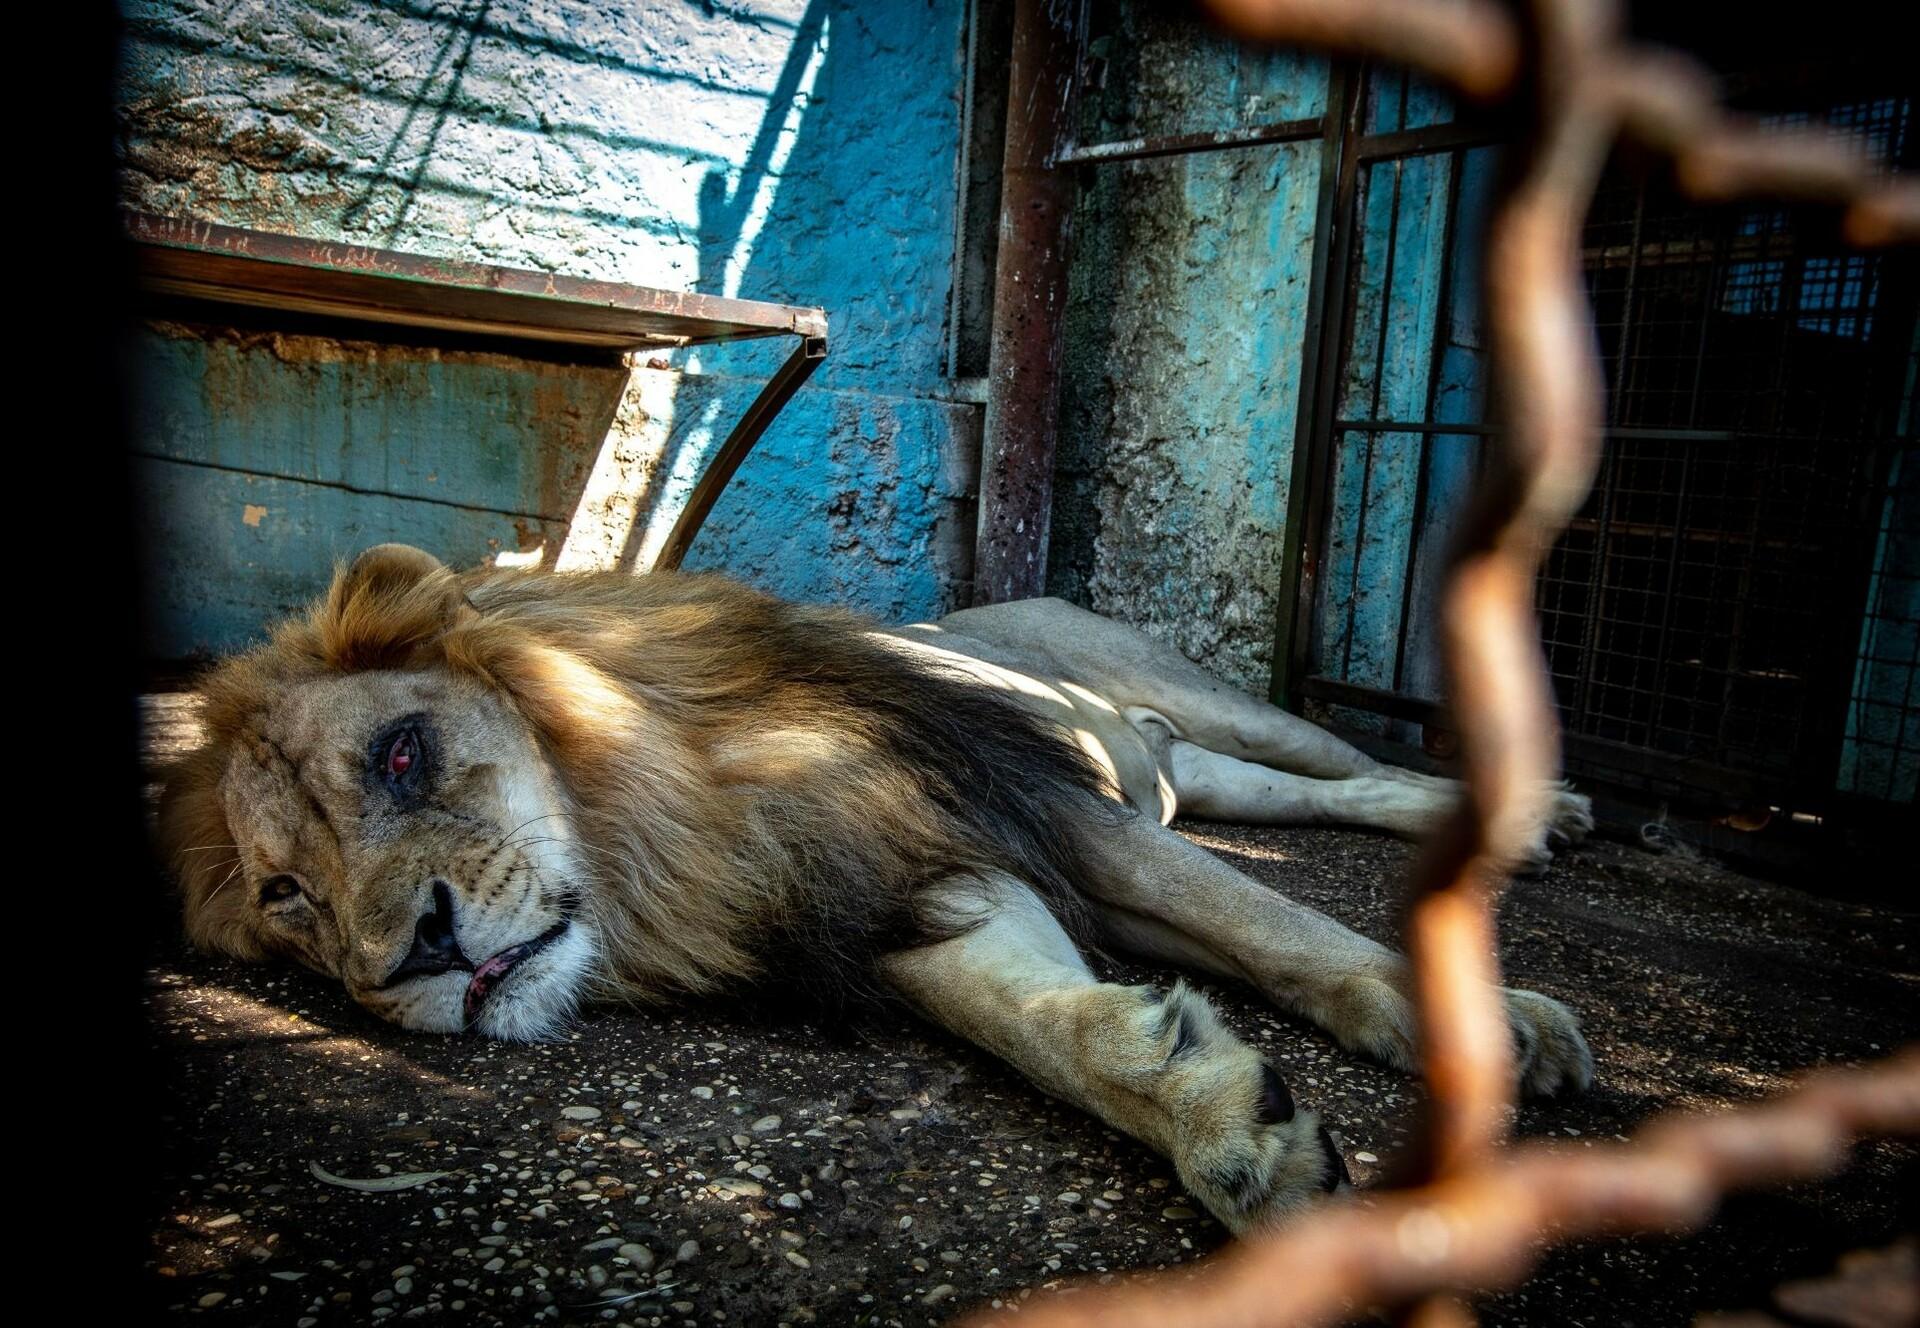 Shutting down Safari Park Zoo in Fier, Albania - FOUR PAWS International -  Animal Welfare Organisation